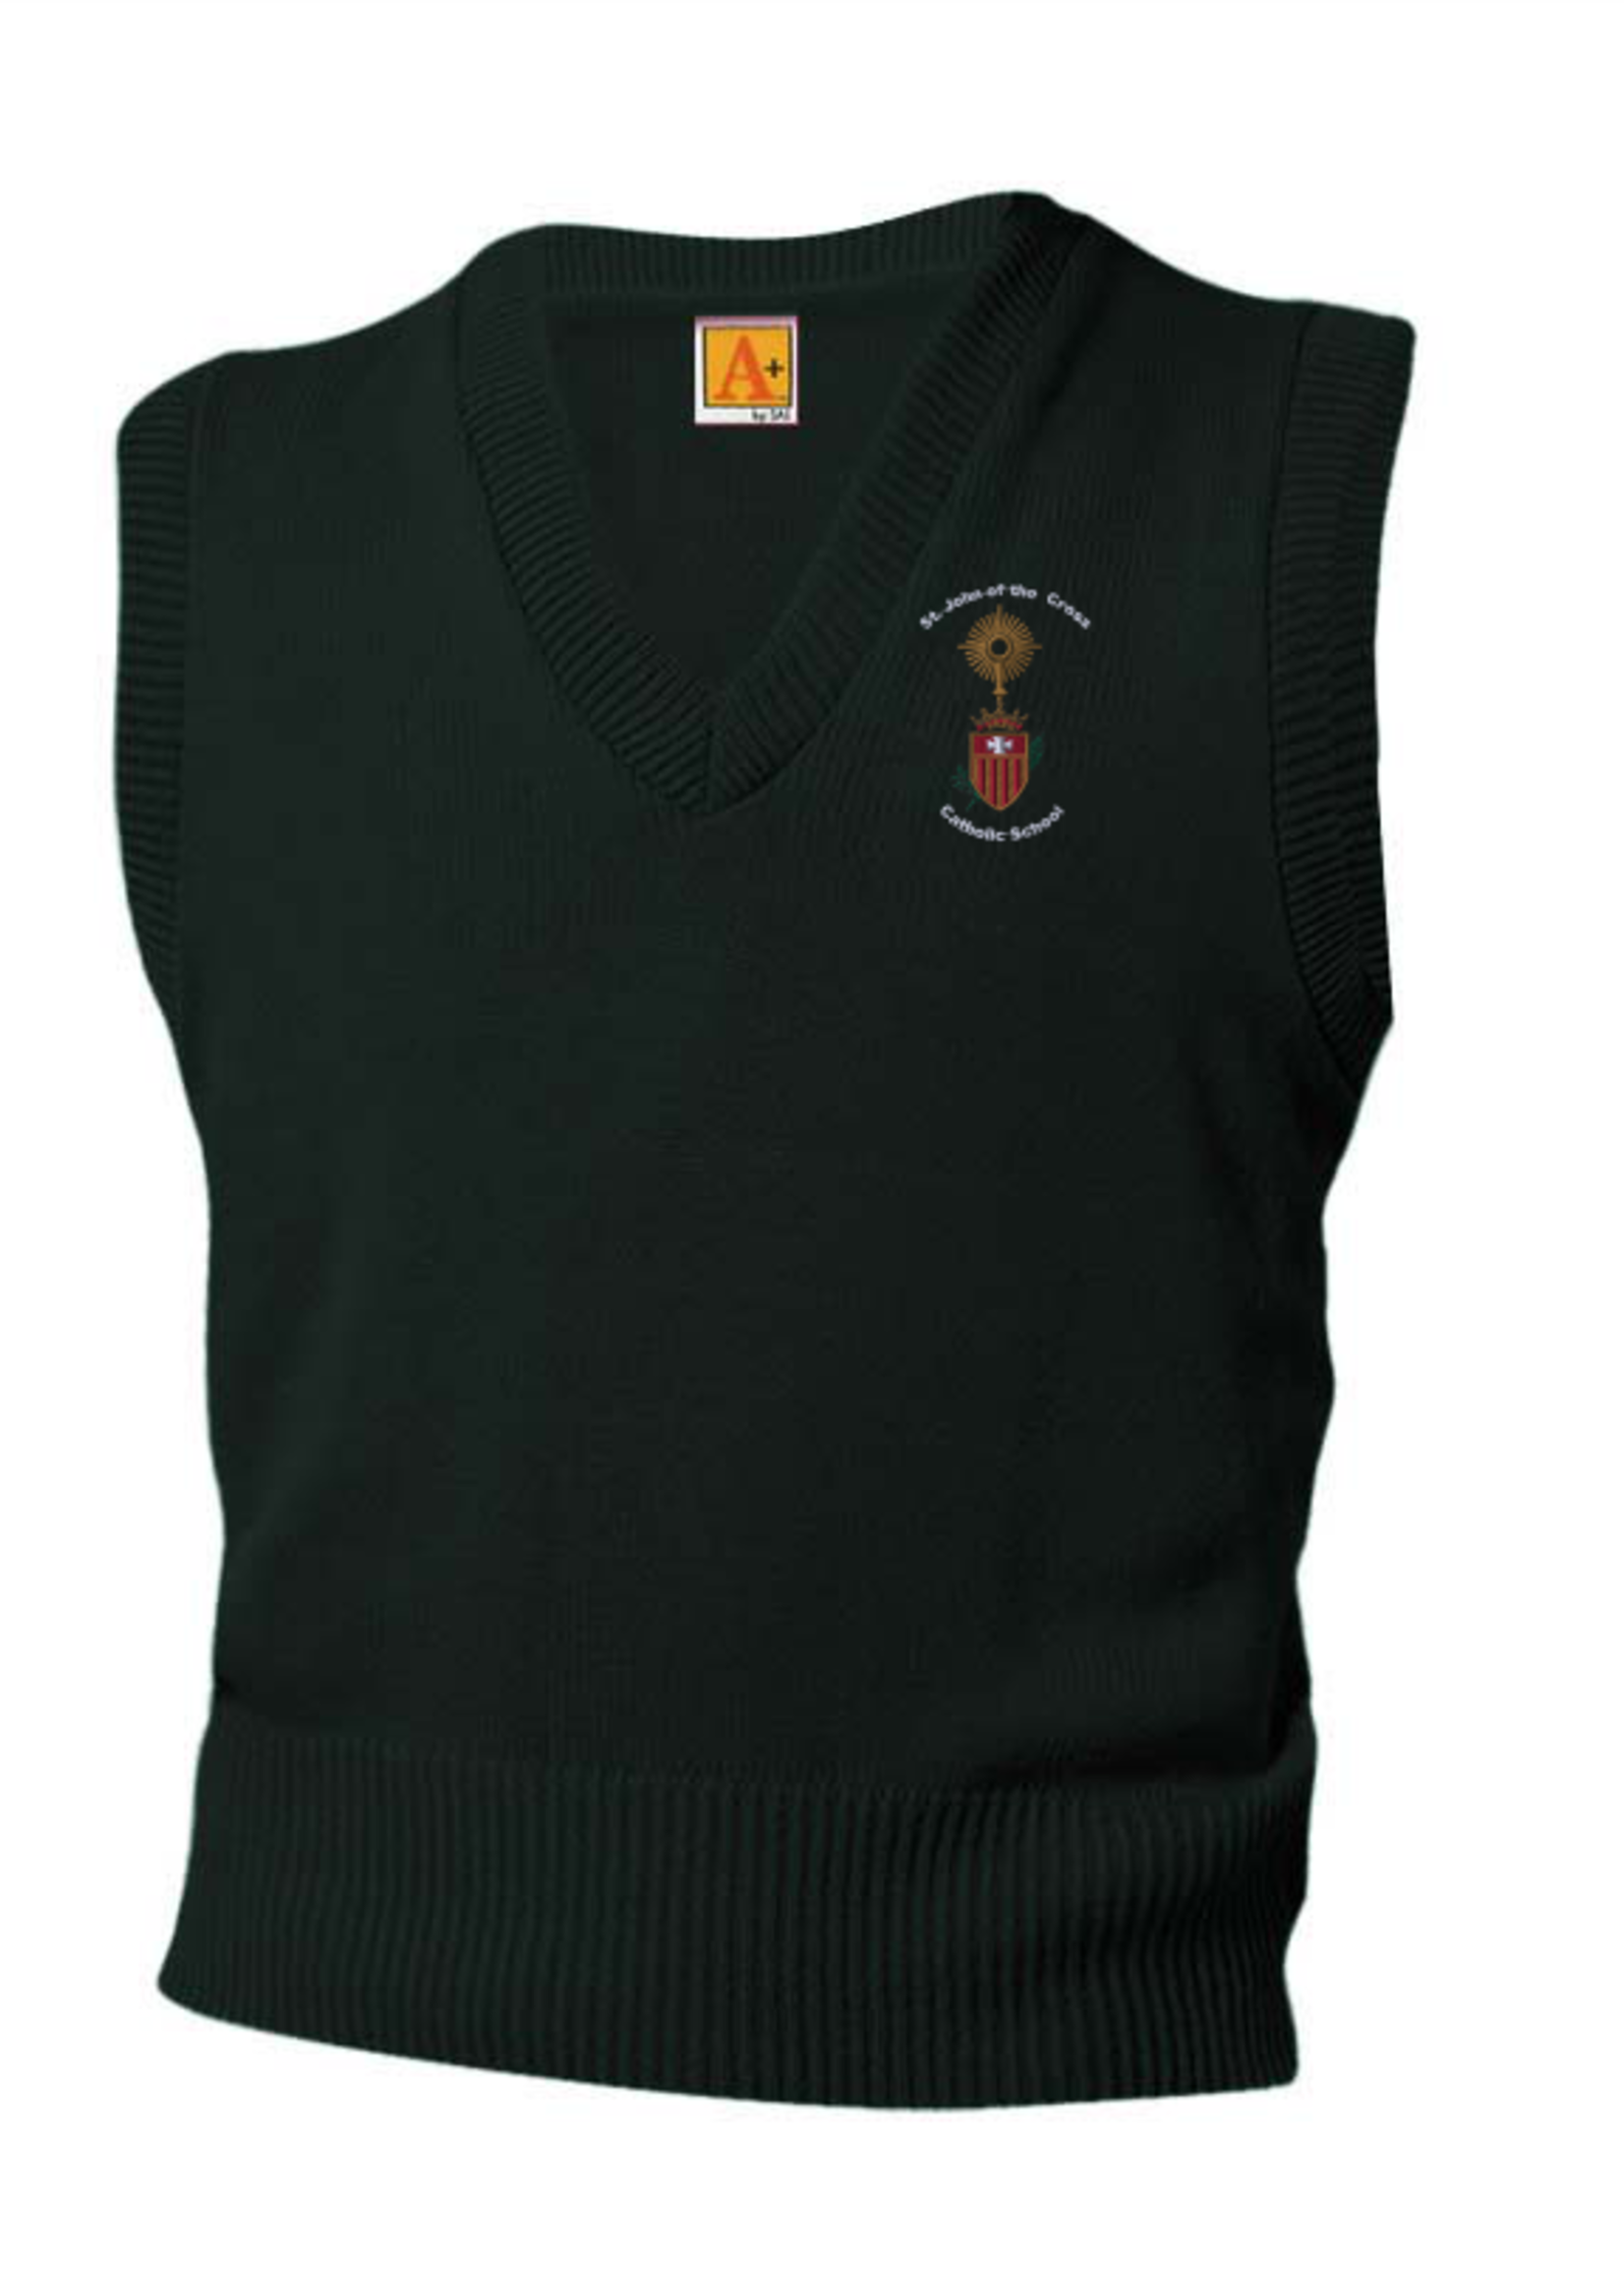 SJC Forest V-neck sweater vest